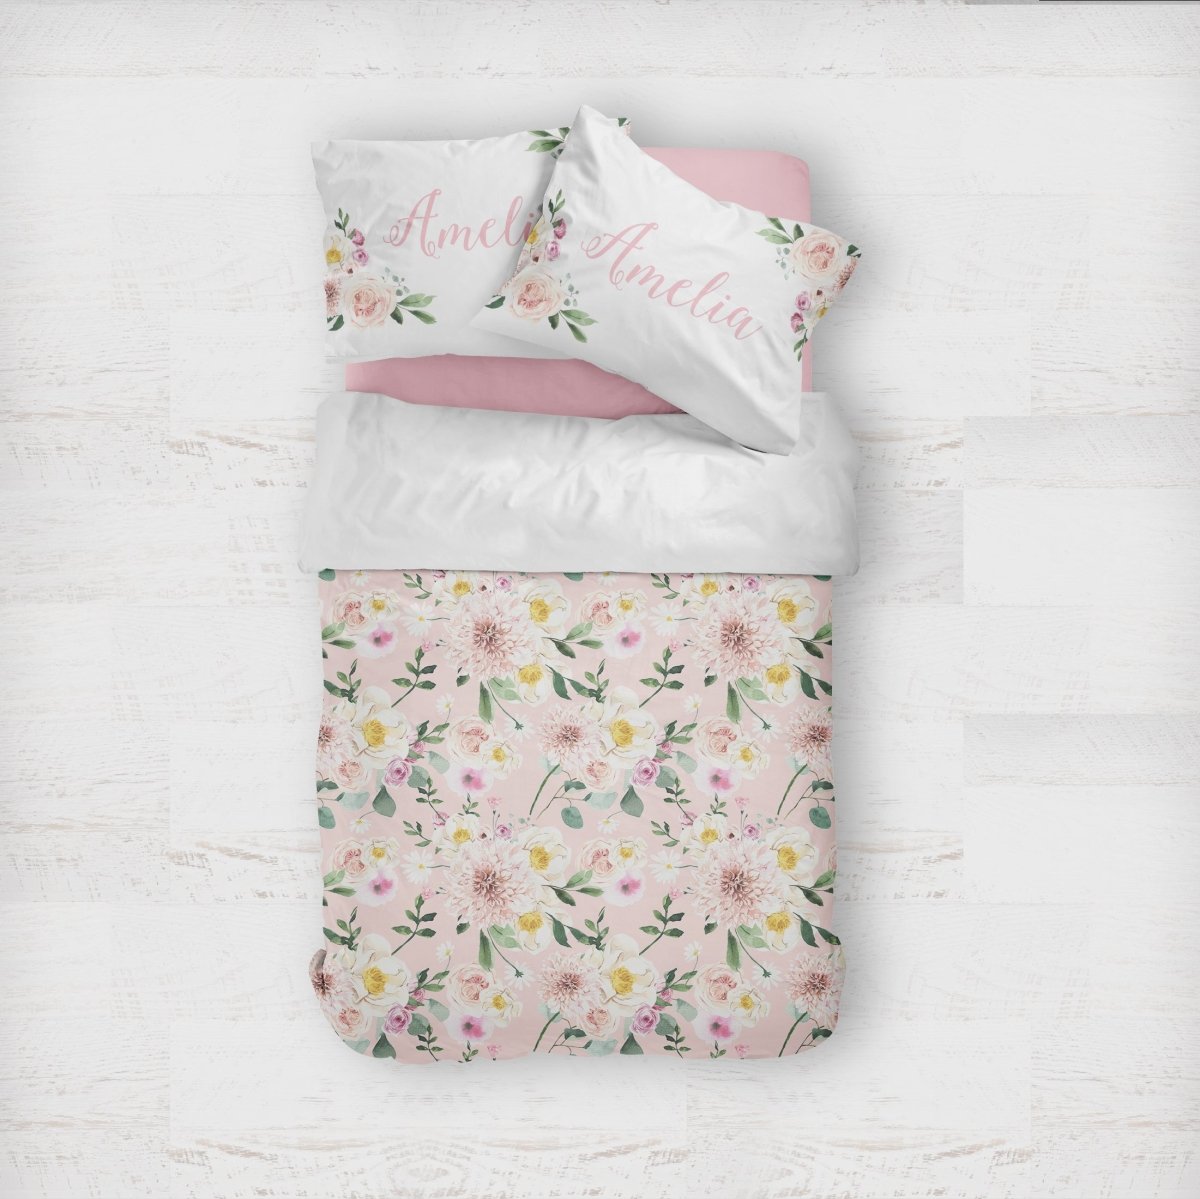 Farm Floral Personalized Kids Bedding Set (Comforter or Duvet Cover) - Farm Floral, gender_girl, text